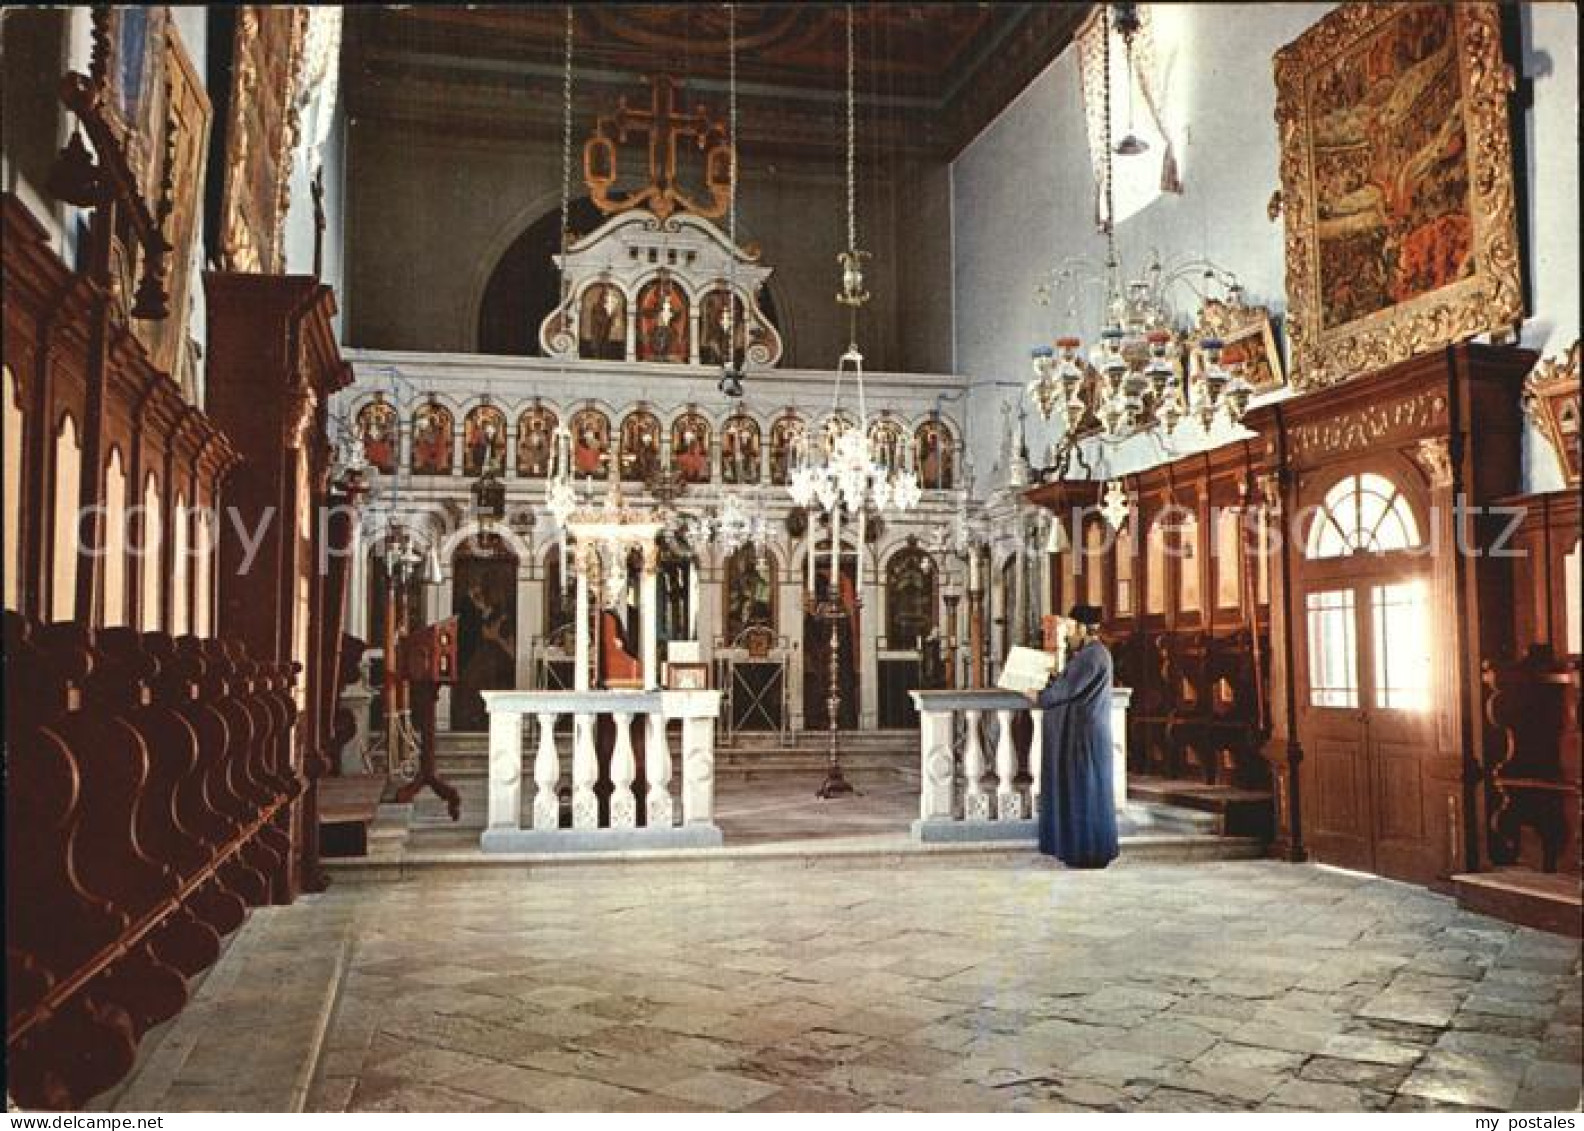 72573613 Corfu Korfu Kloster Griechenland - Grèce